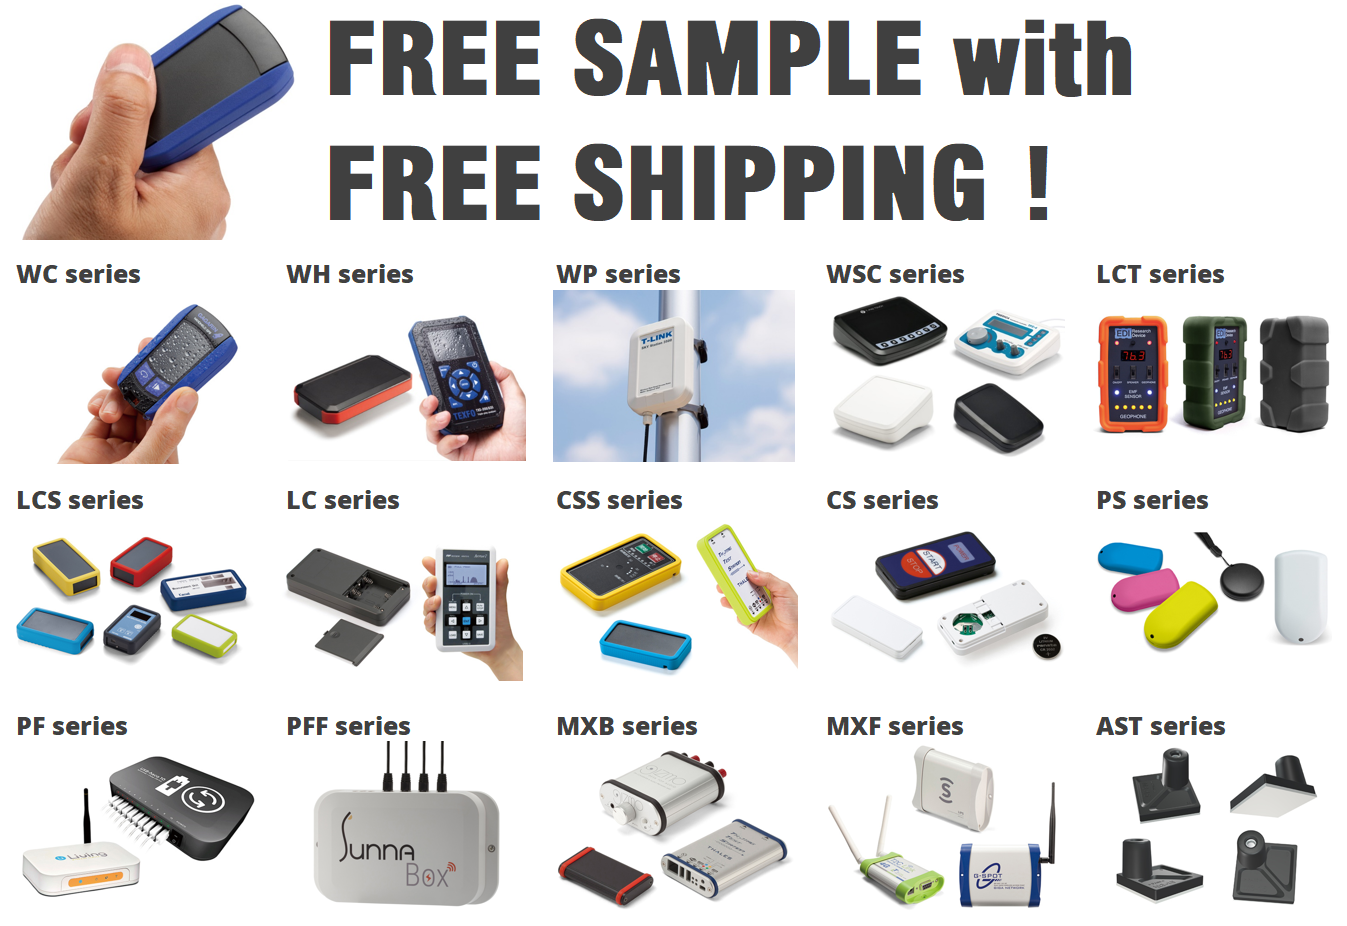 Free electronics sample deals